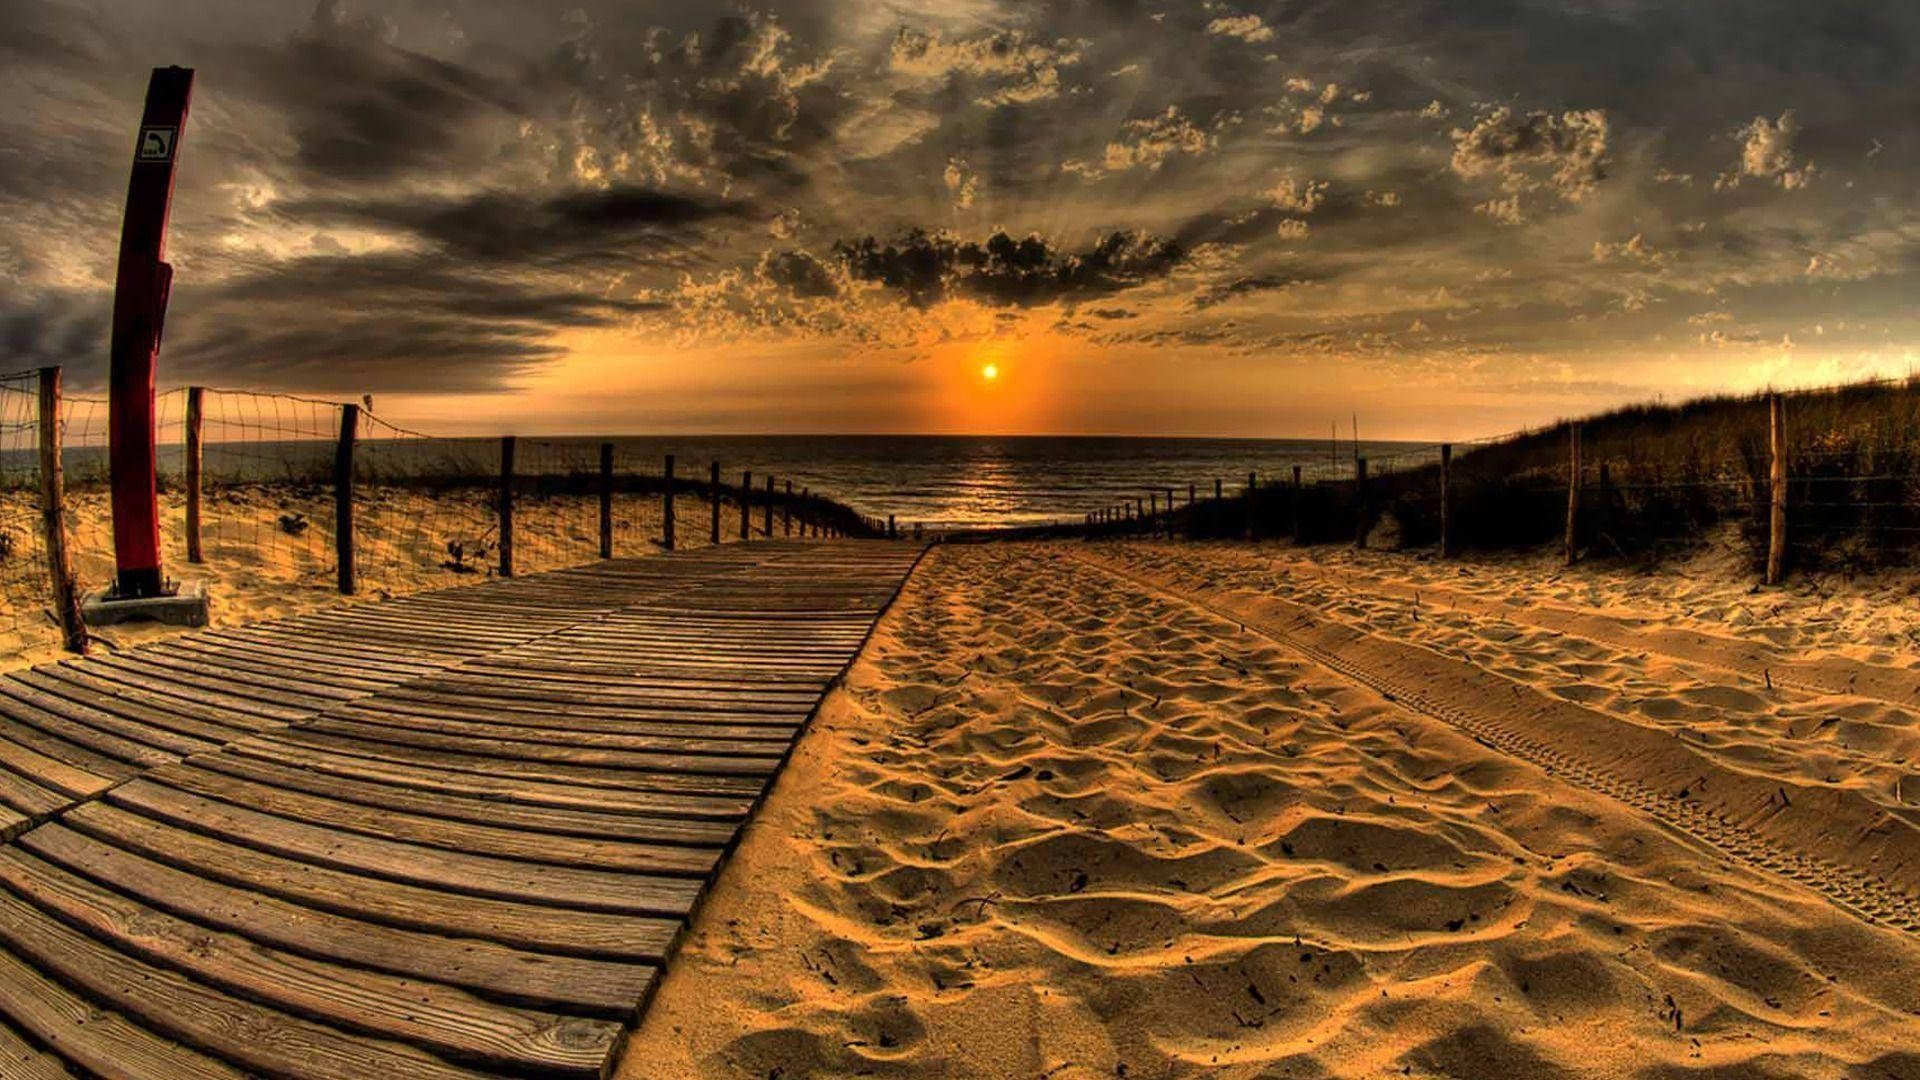 Caption: Serene Sunset At The Beach Wallpaper